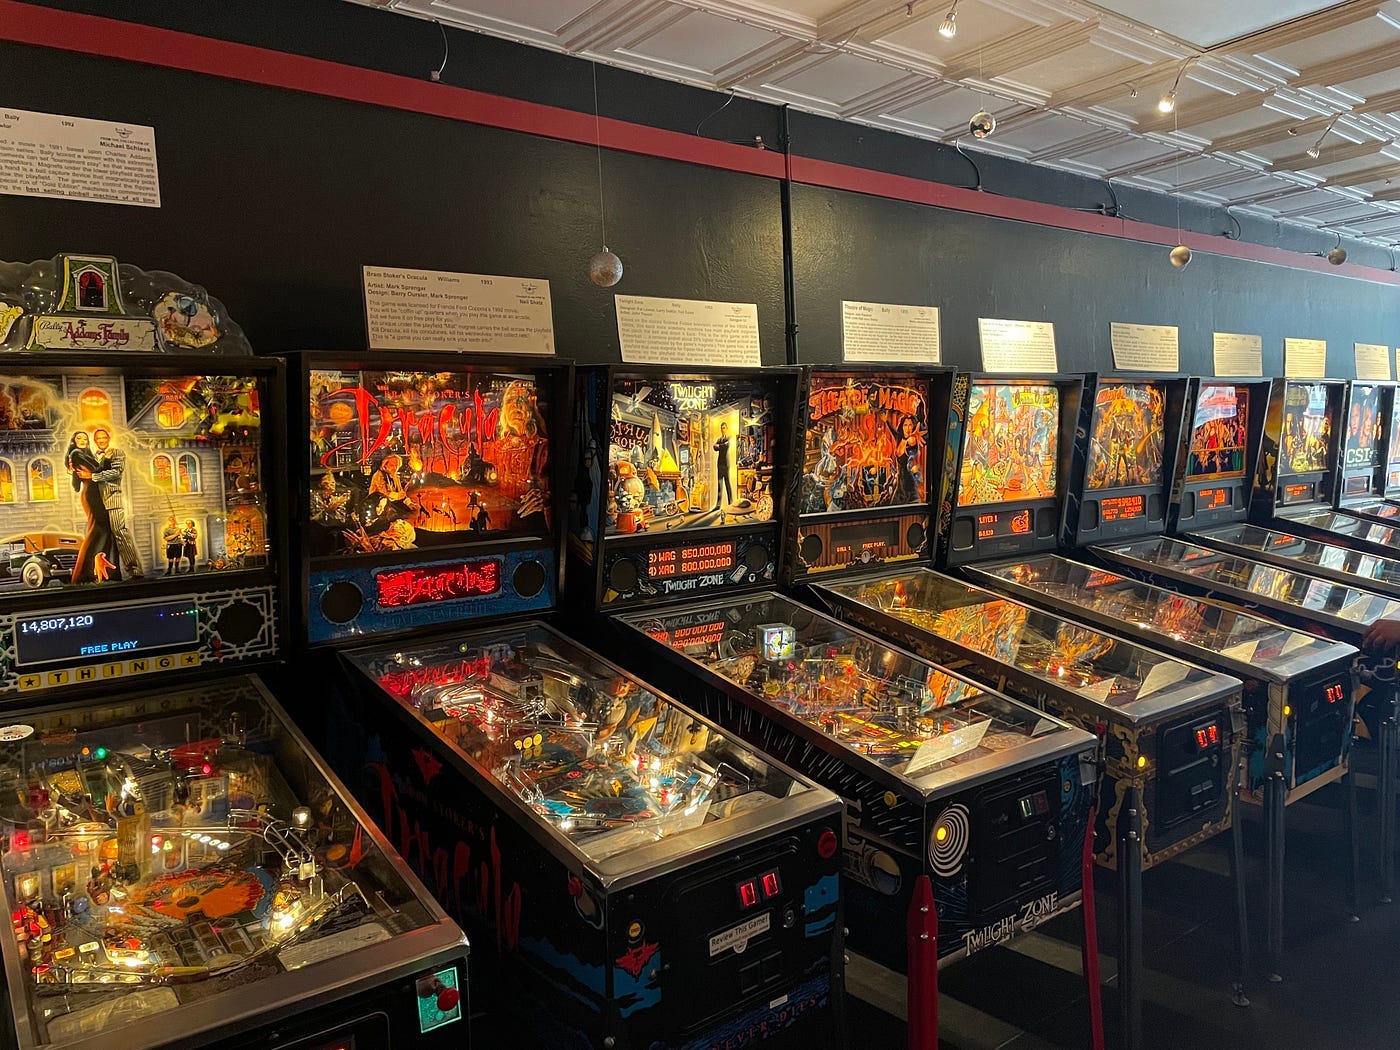 Myrtle Beach Pinball Museum: Retro gameplay benefits children